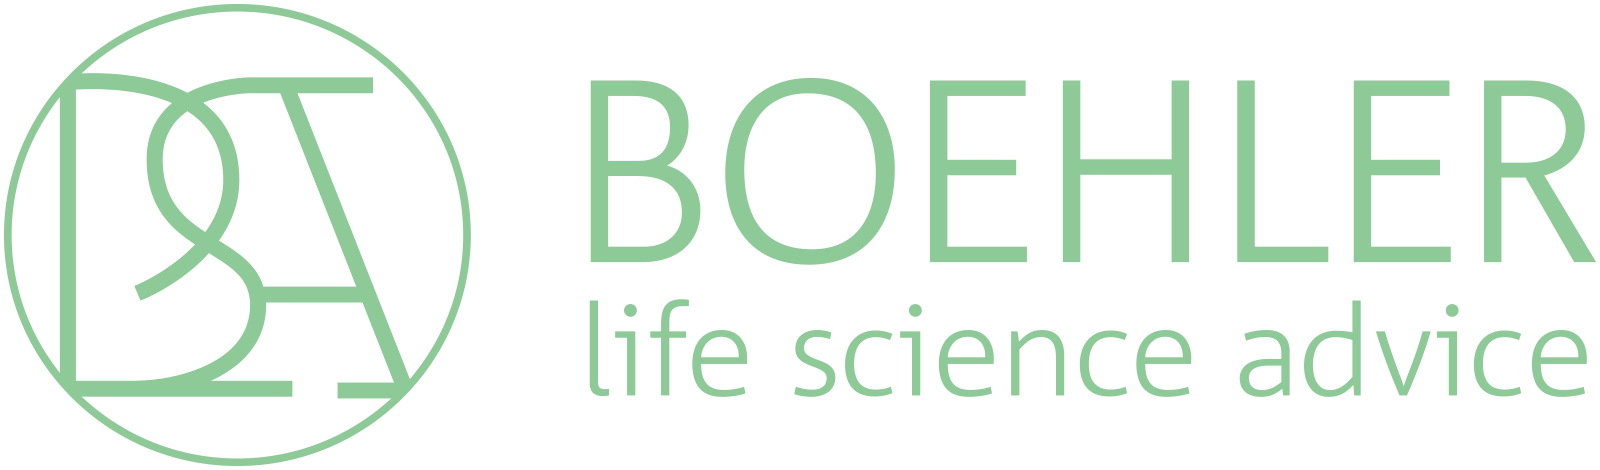 BOEHLER life science advice